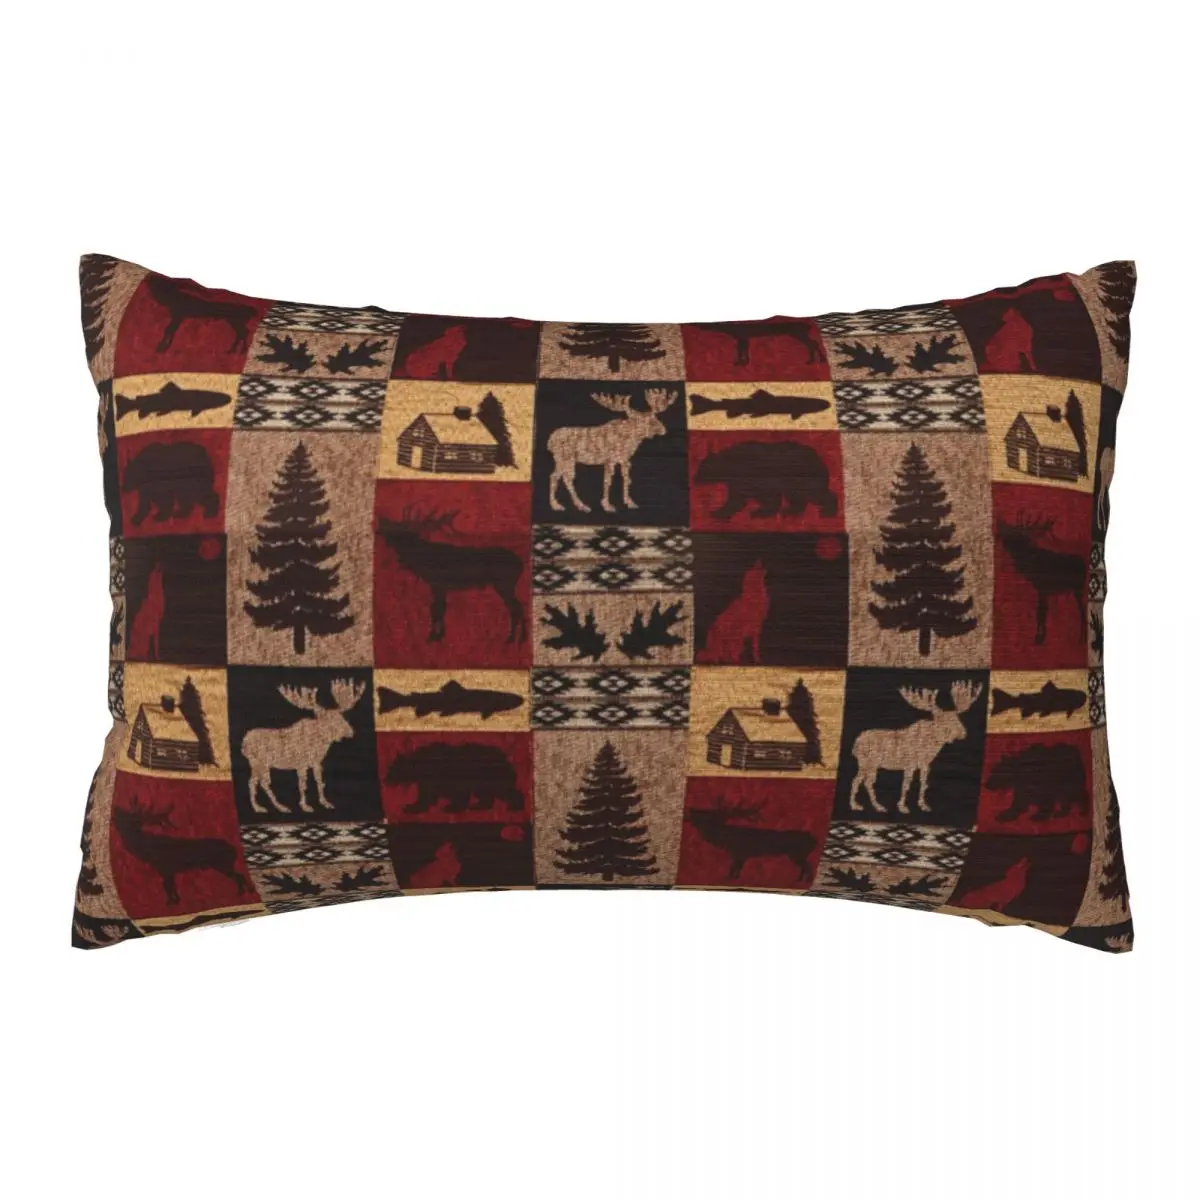 

Lodge Bear Deer Fish Decorative Pillow Covers Throw Pillow Cover Home Pillows Shells Cushion Cover Zippered Pillowcase